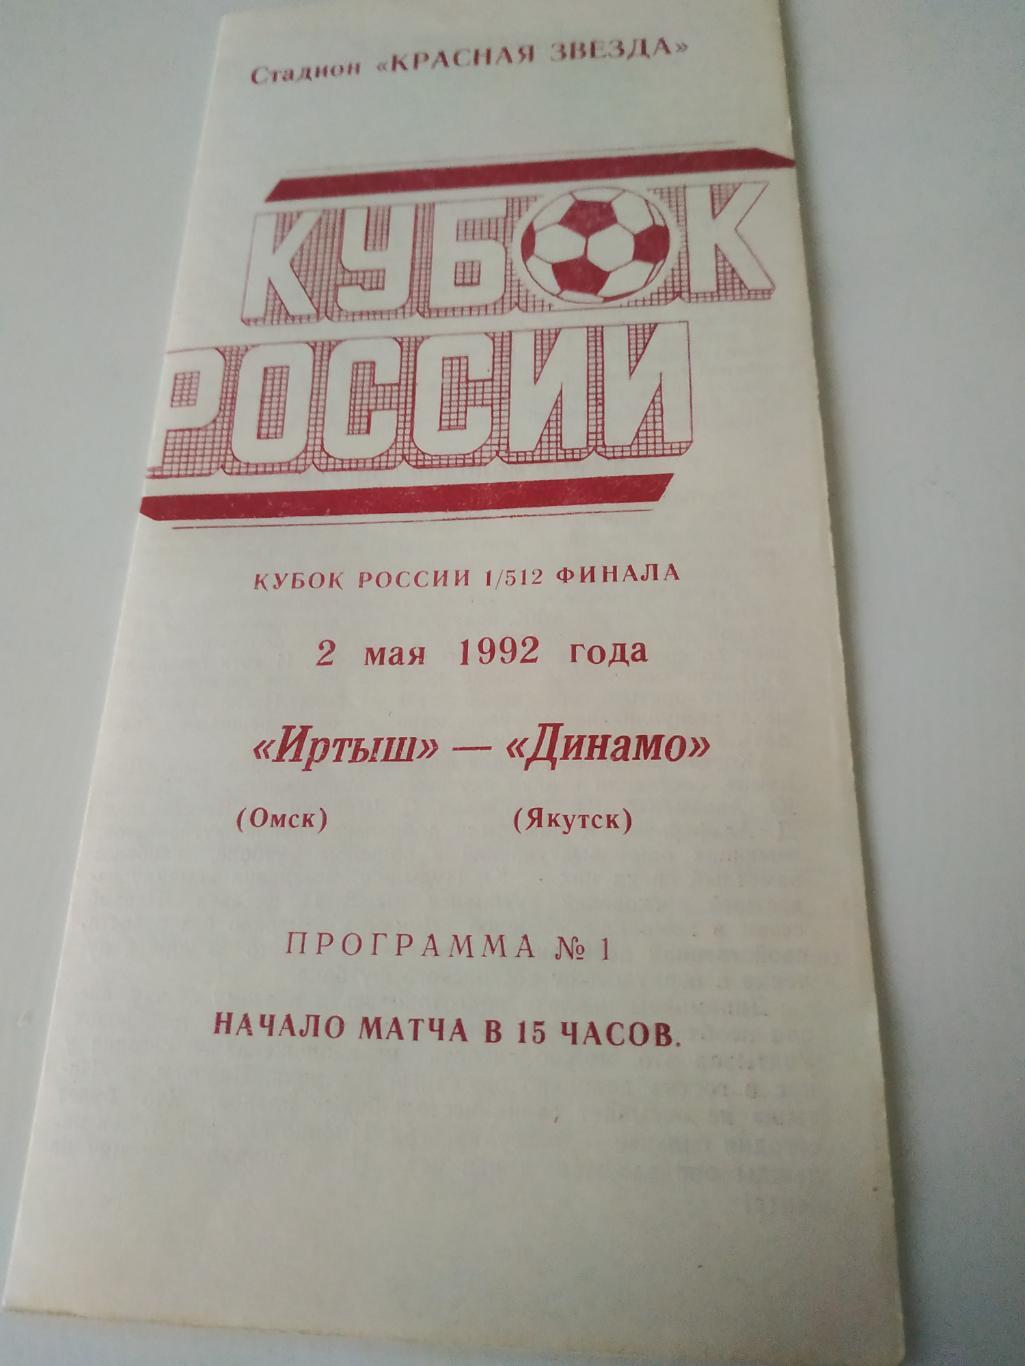 Иртыш Омск - Динамо( Якутск) 1992 кубок России